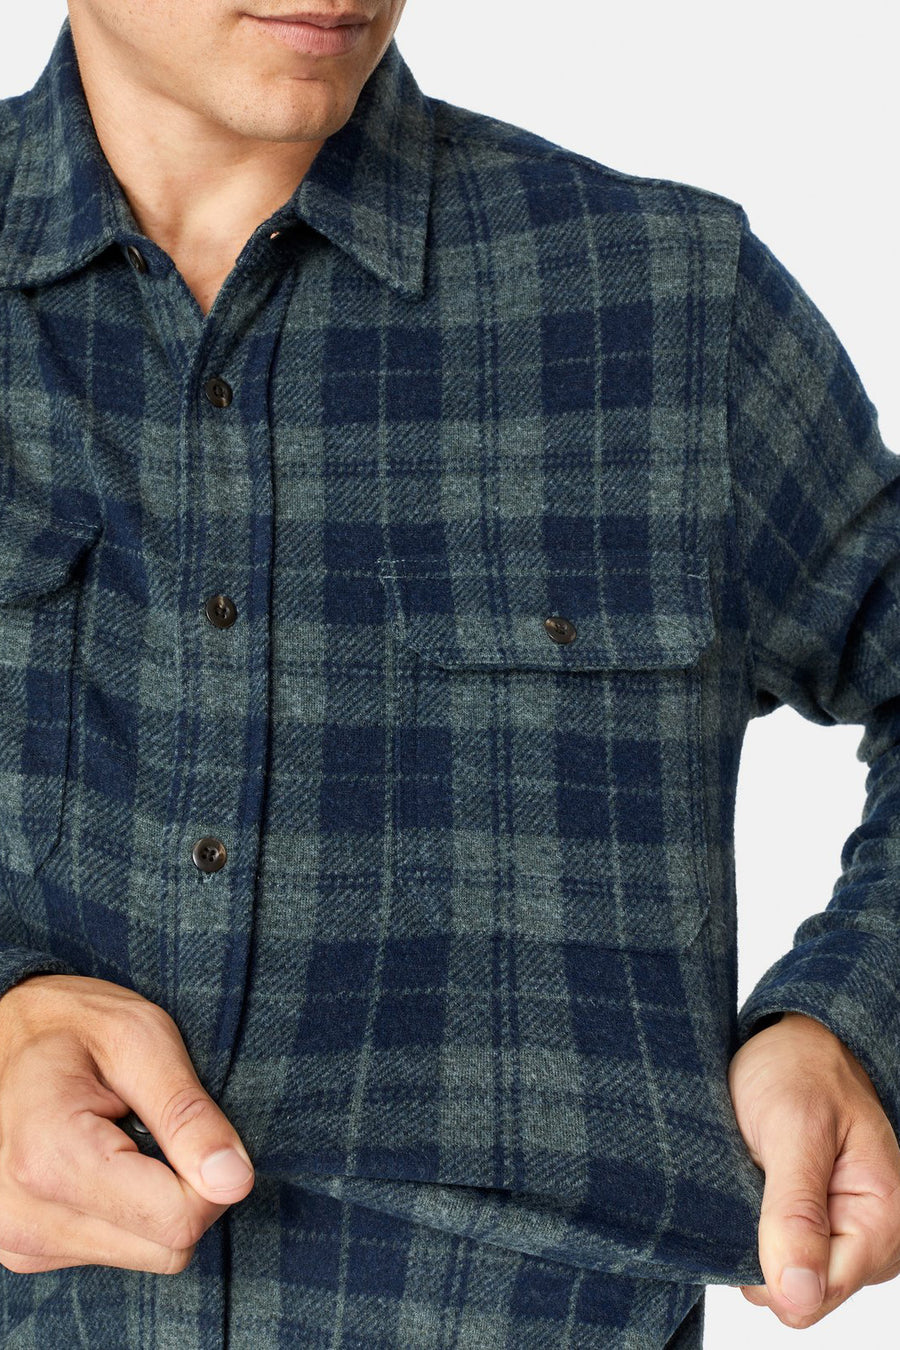 Generation 4-Way Stretch Shirt - Olive Plaid Flannel